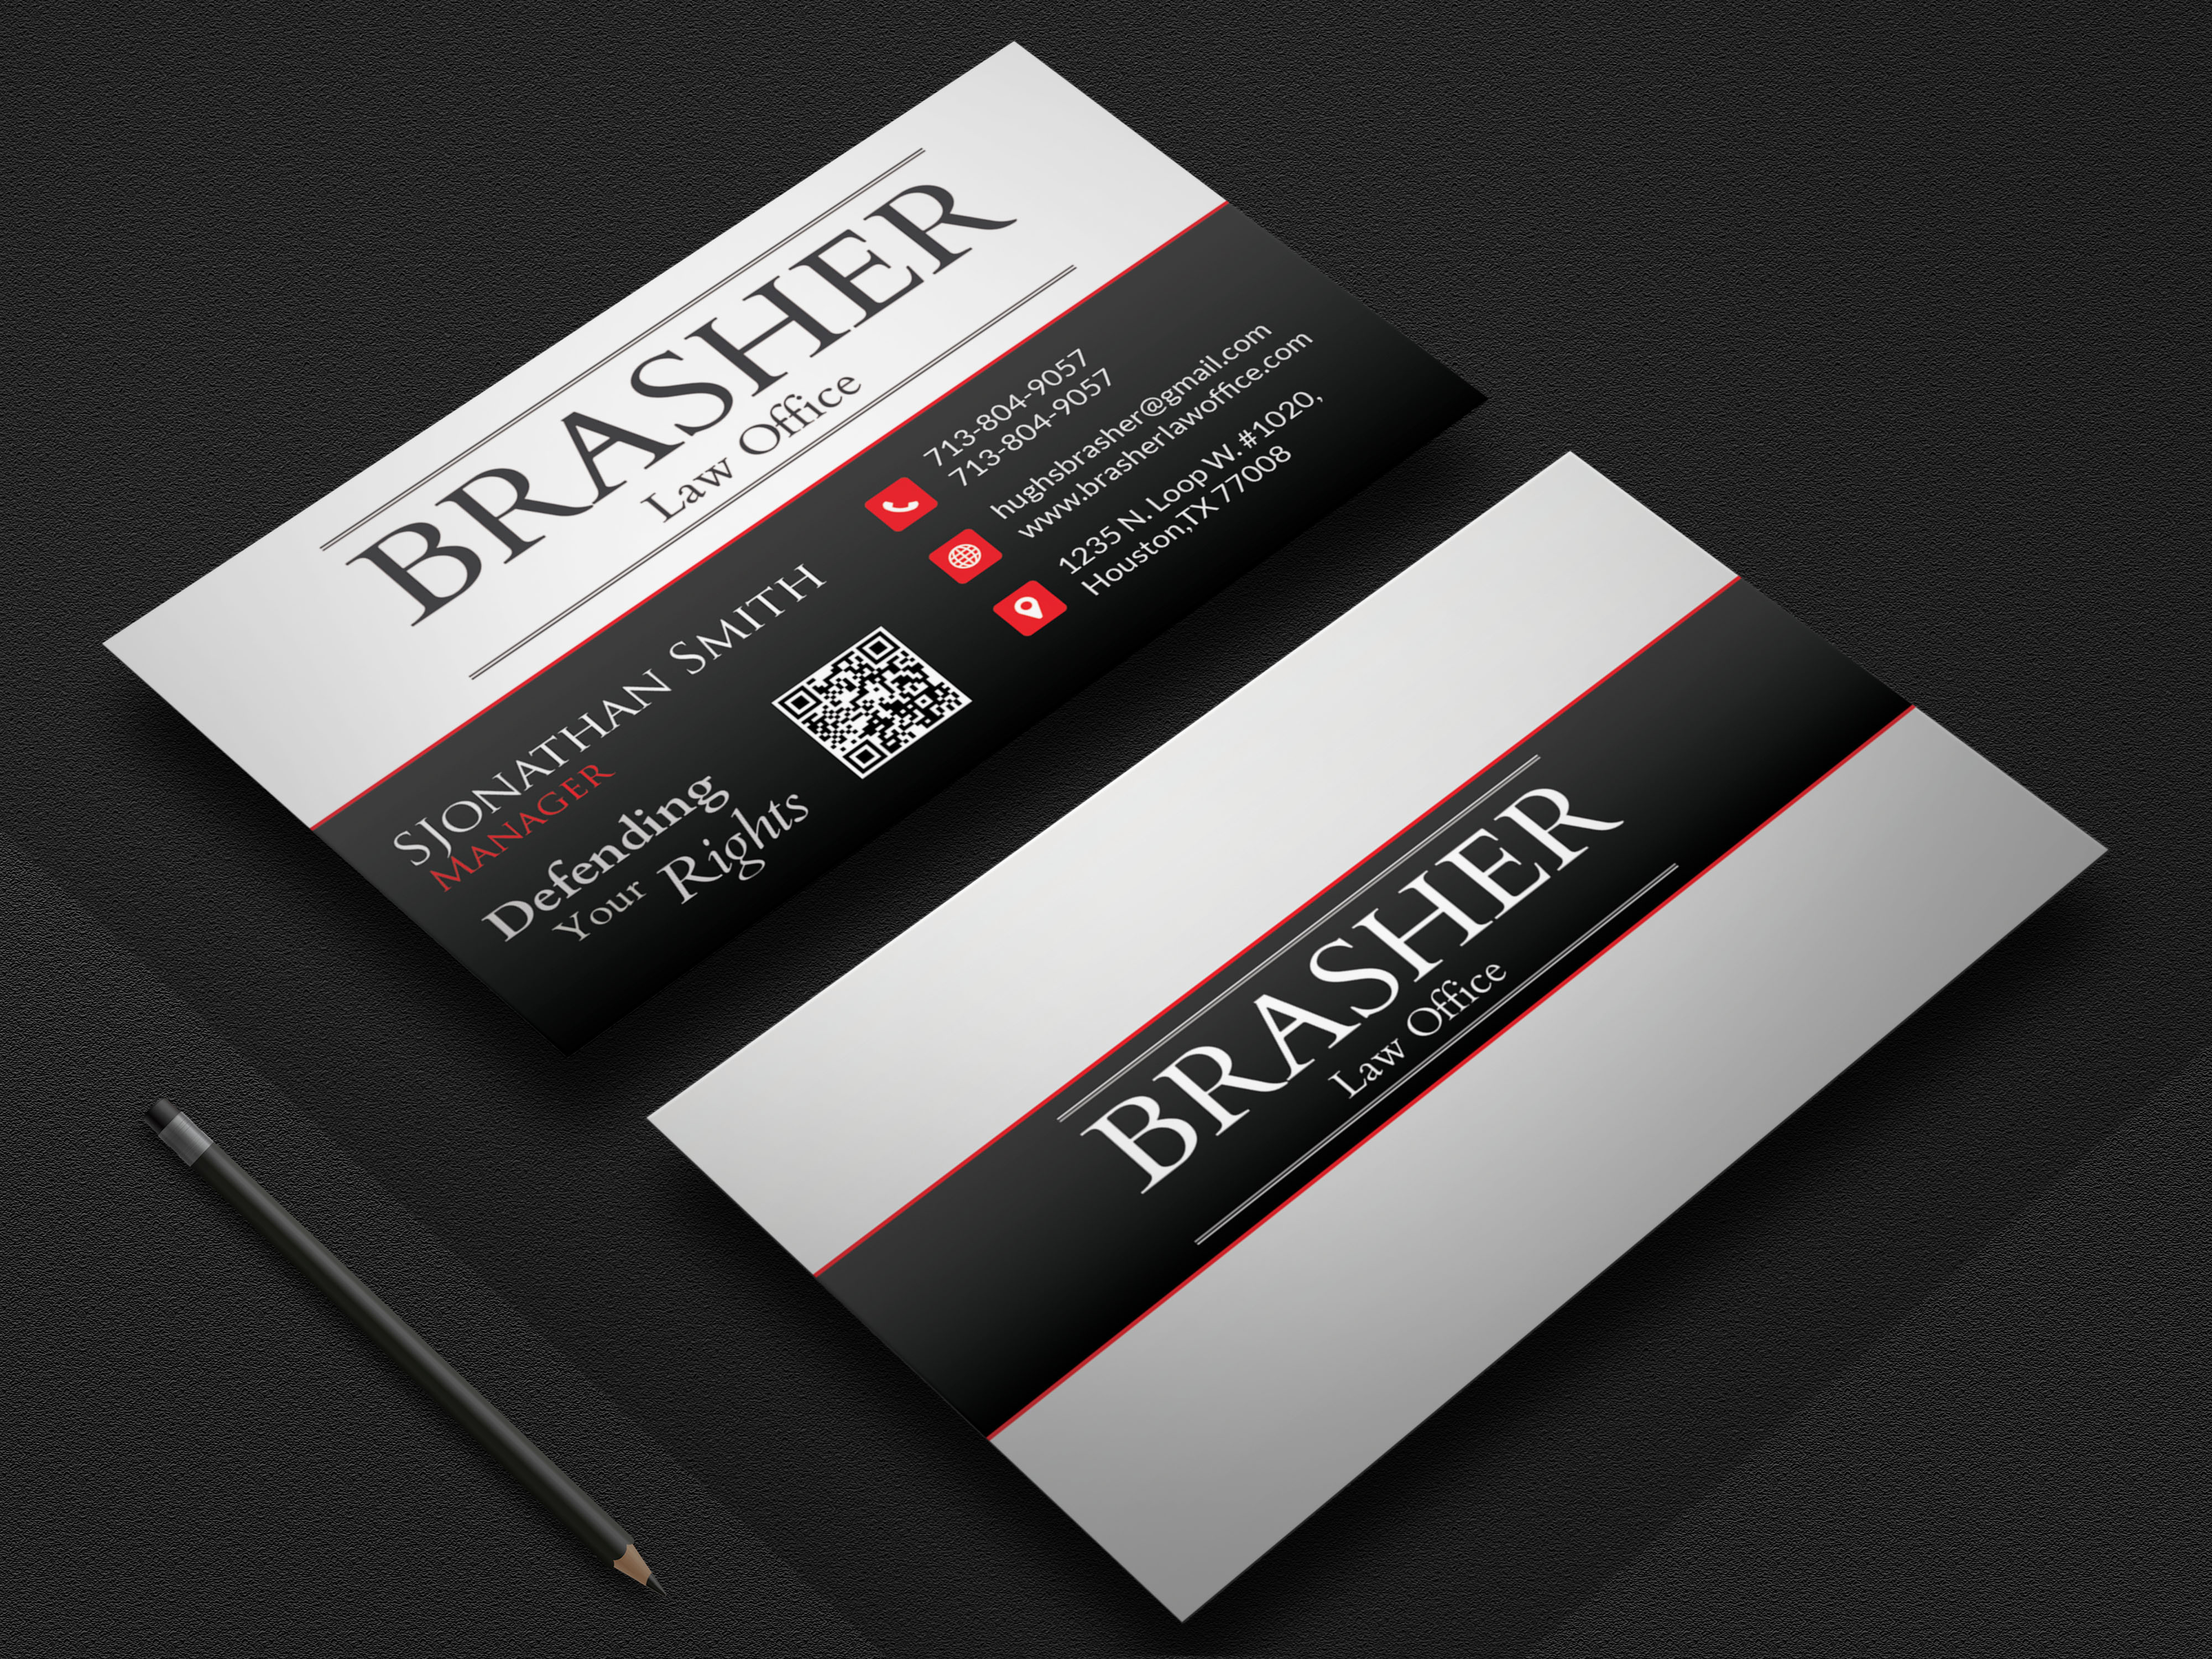 Business Card & Stationery Design entry 3040864 submitted by alizainal to the Business Card & Stationery Design for Brasher Law, PC run by hughbrasher